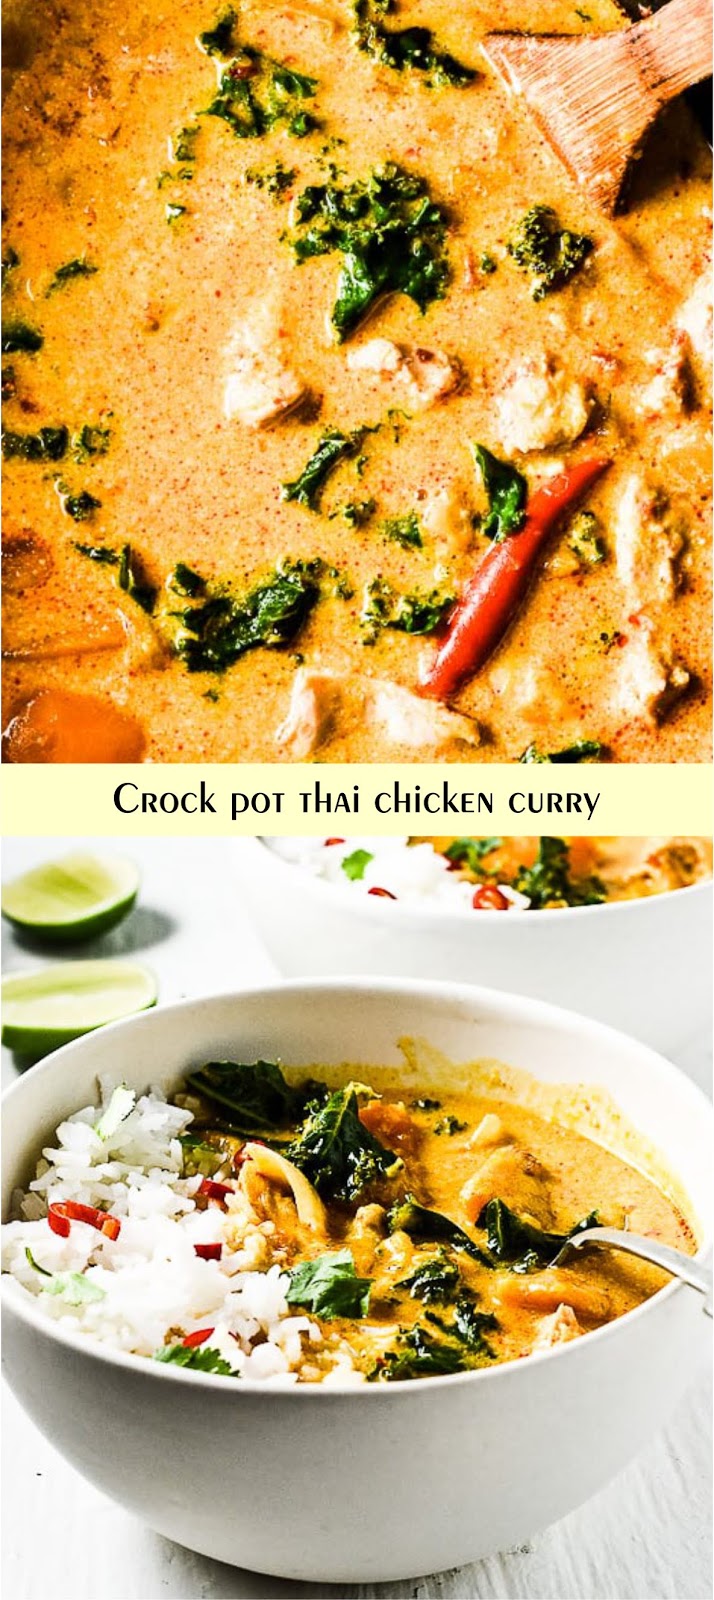 Crock pot thai chicken curry